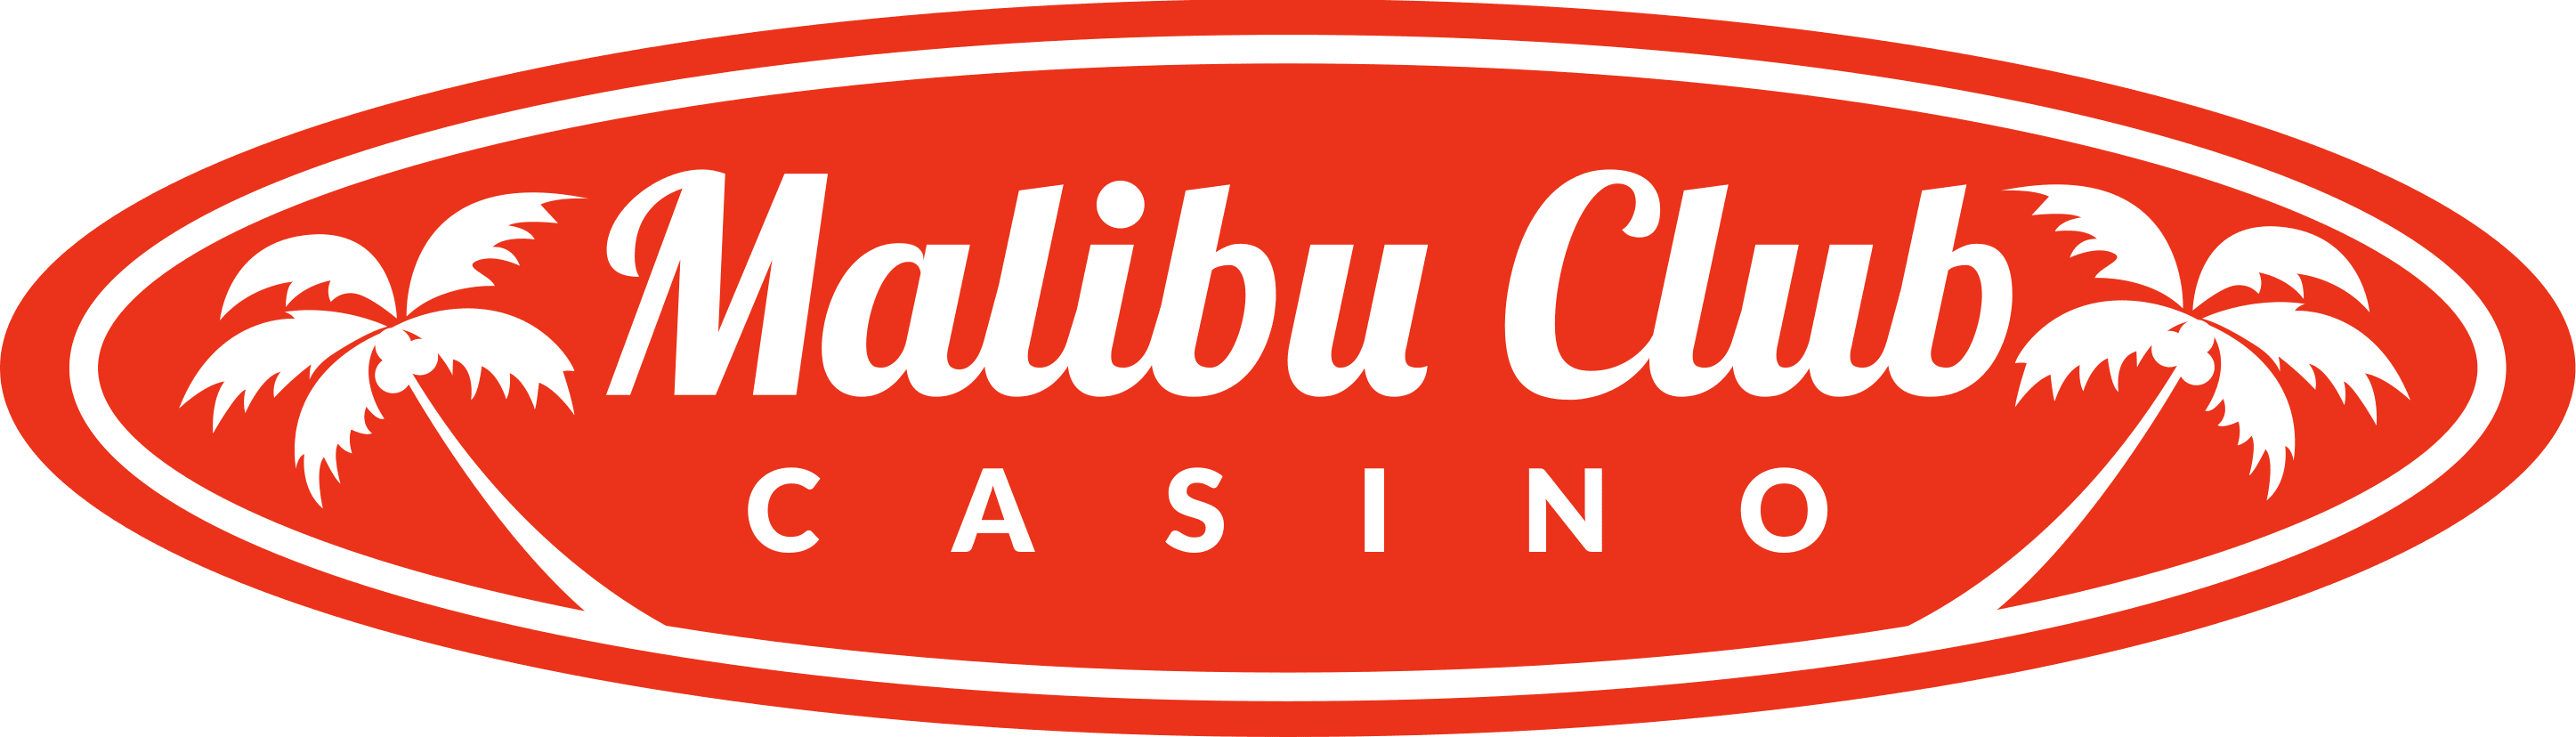 Malibu Club Casino Welcome Bonus